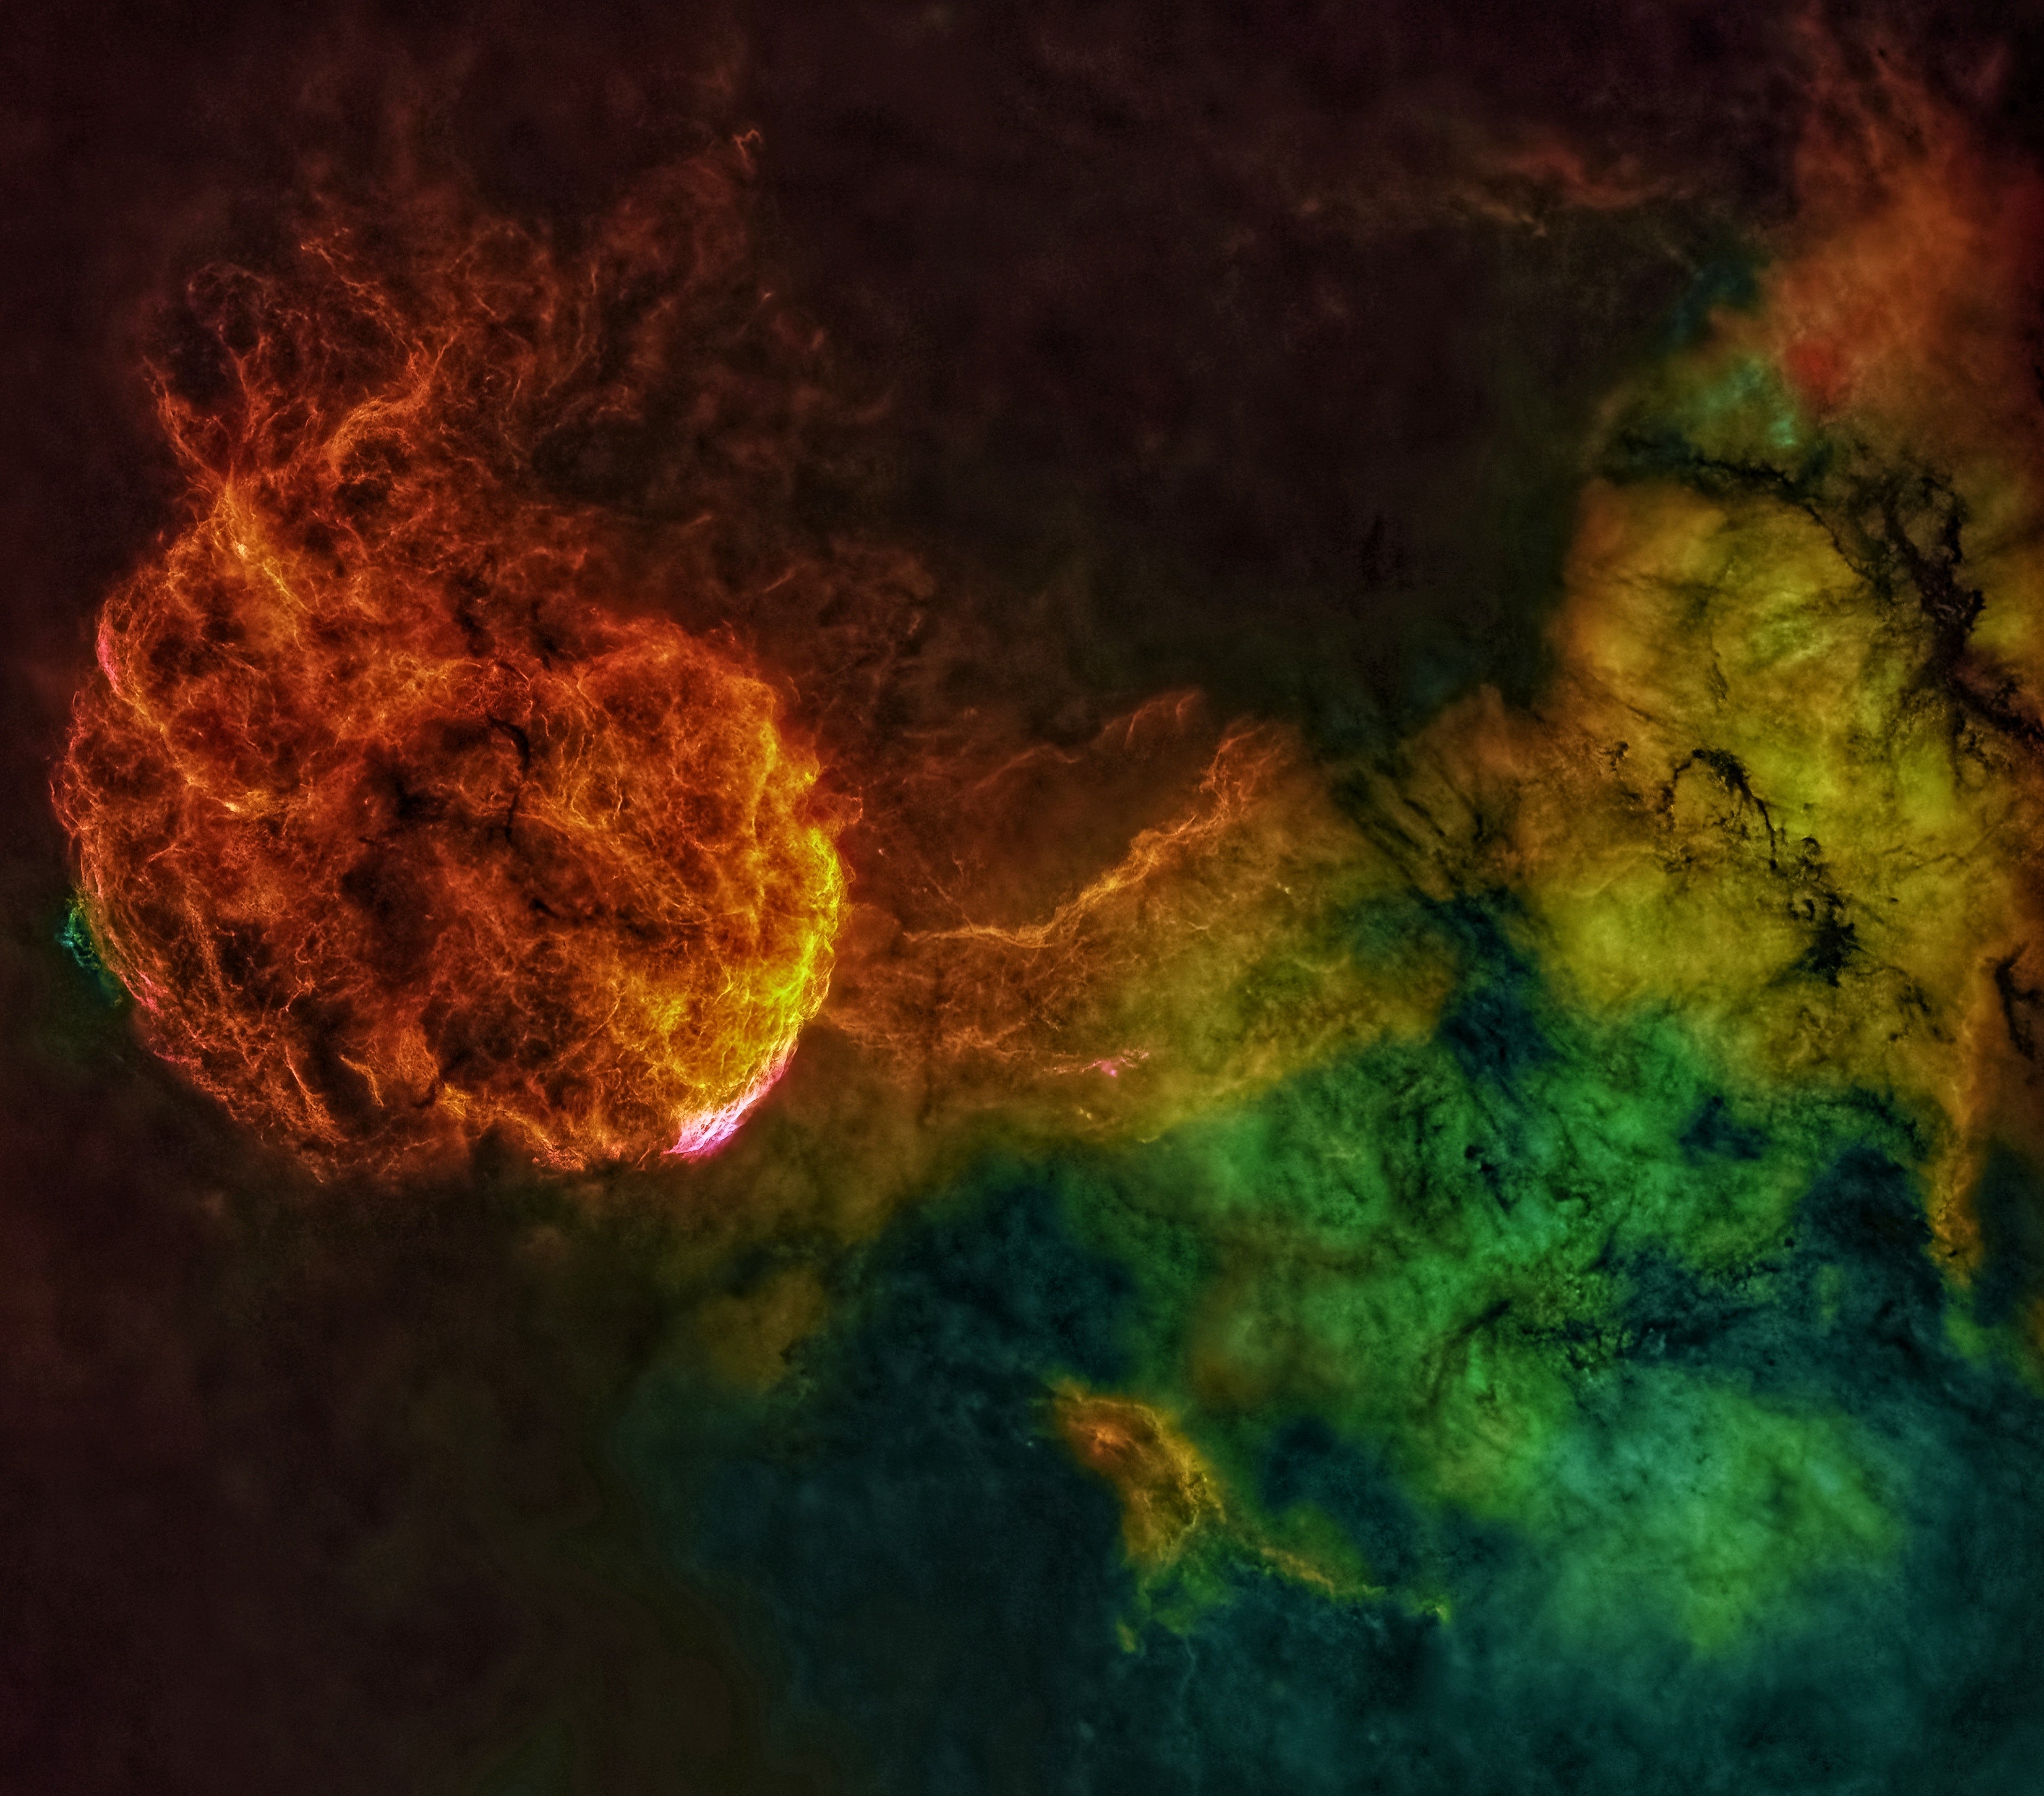 The Jellyfish Nebula. (Image: Peter Larkin)